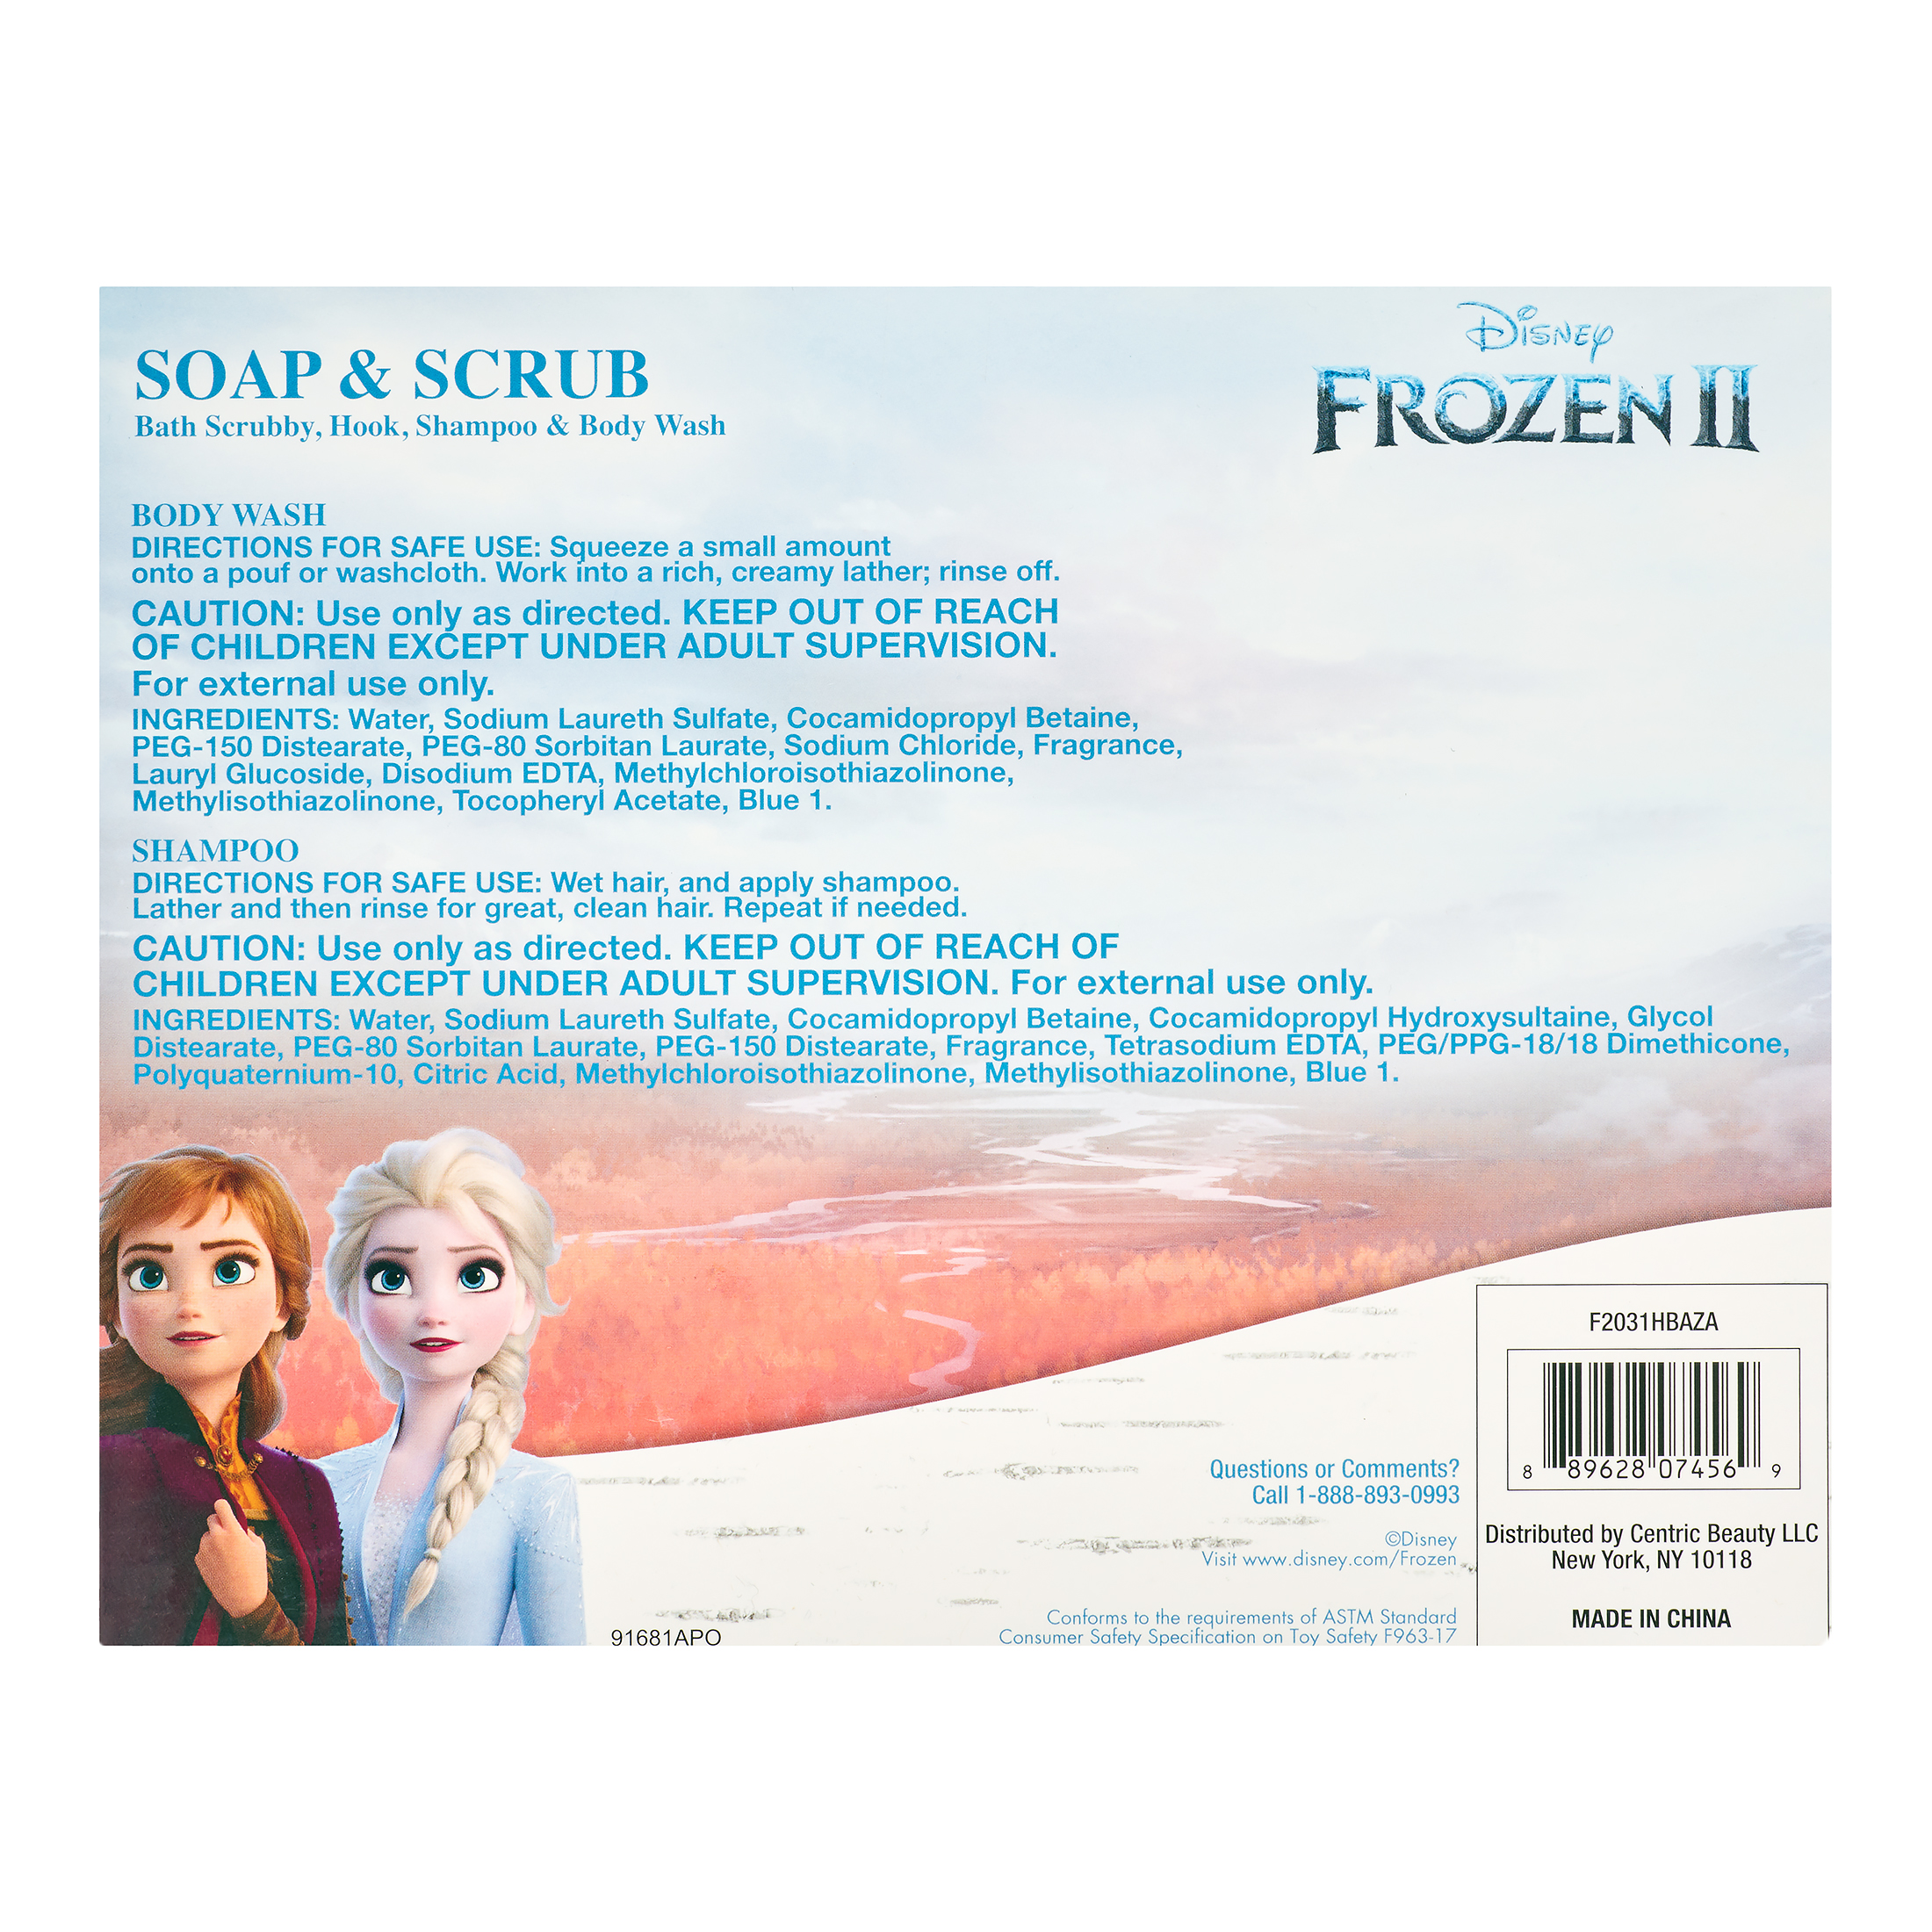 Disney Frozen II 4-Piece Soap and Scrub Body Wash and Shampoo Set - image 4 of 5